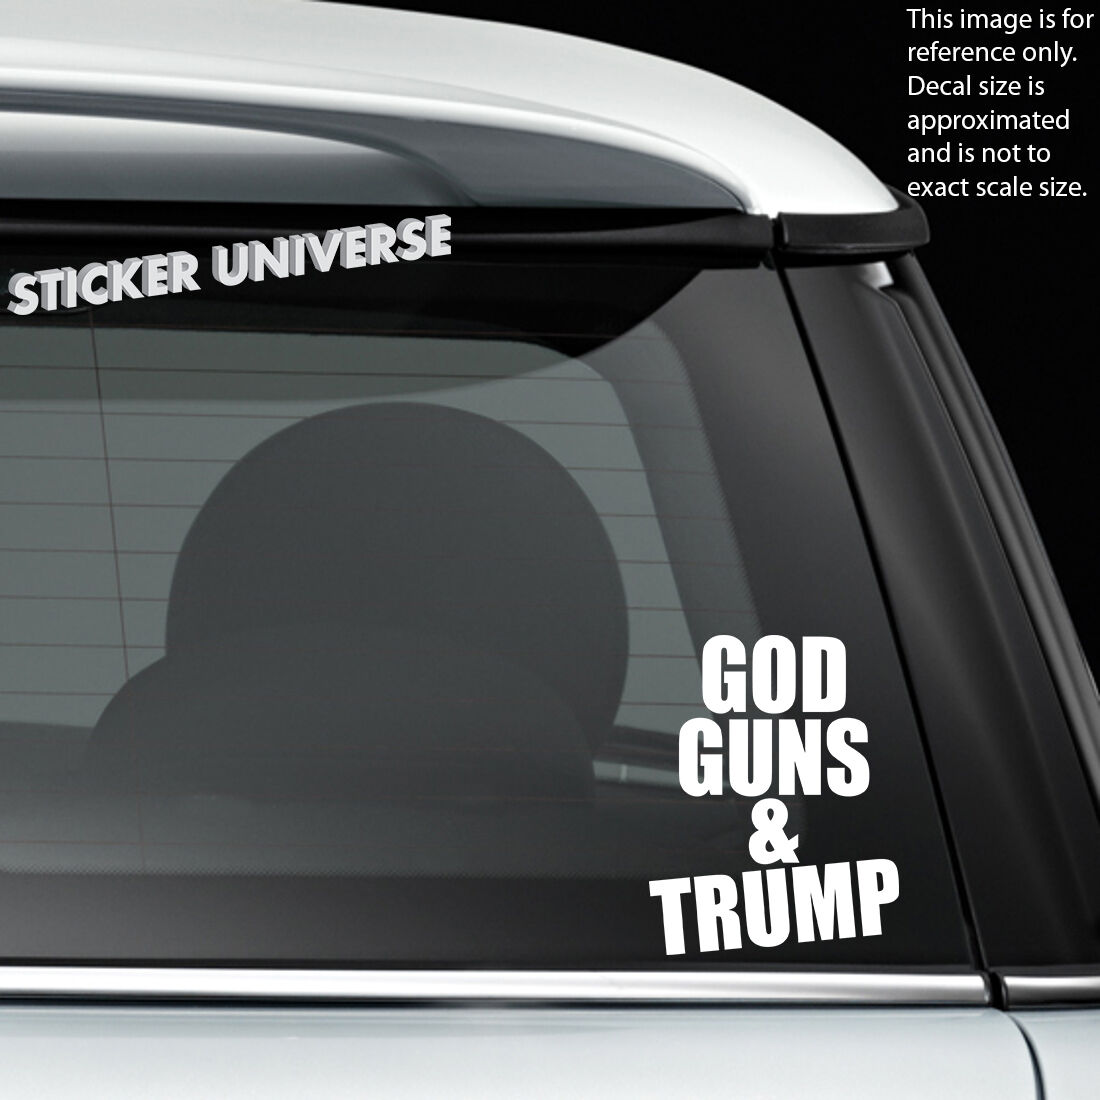 GOD GUNS & TRUMP Car Window Vinyl Decal Bumper Sticker President Politics 0514